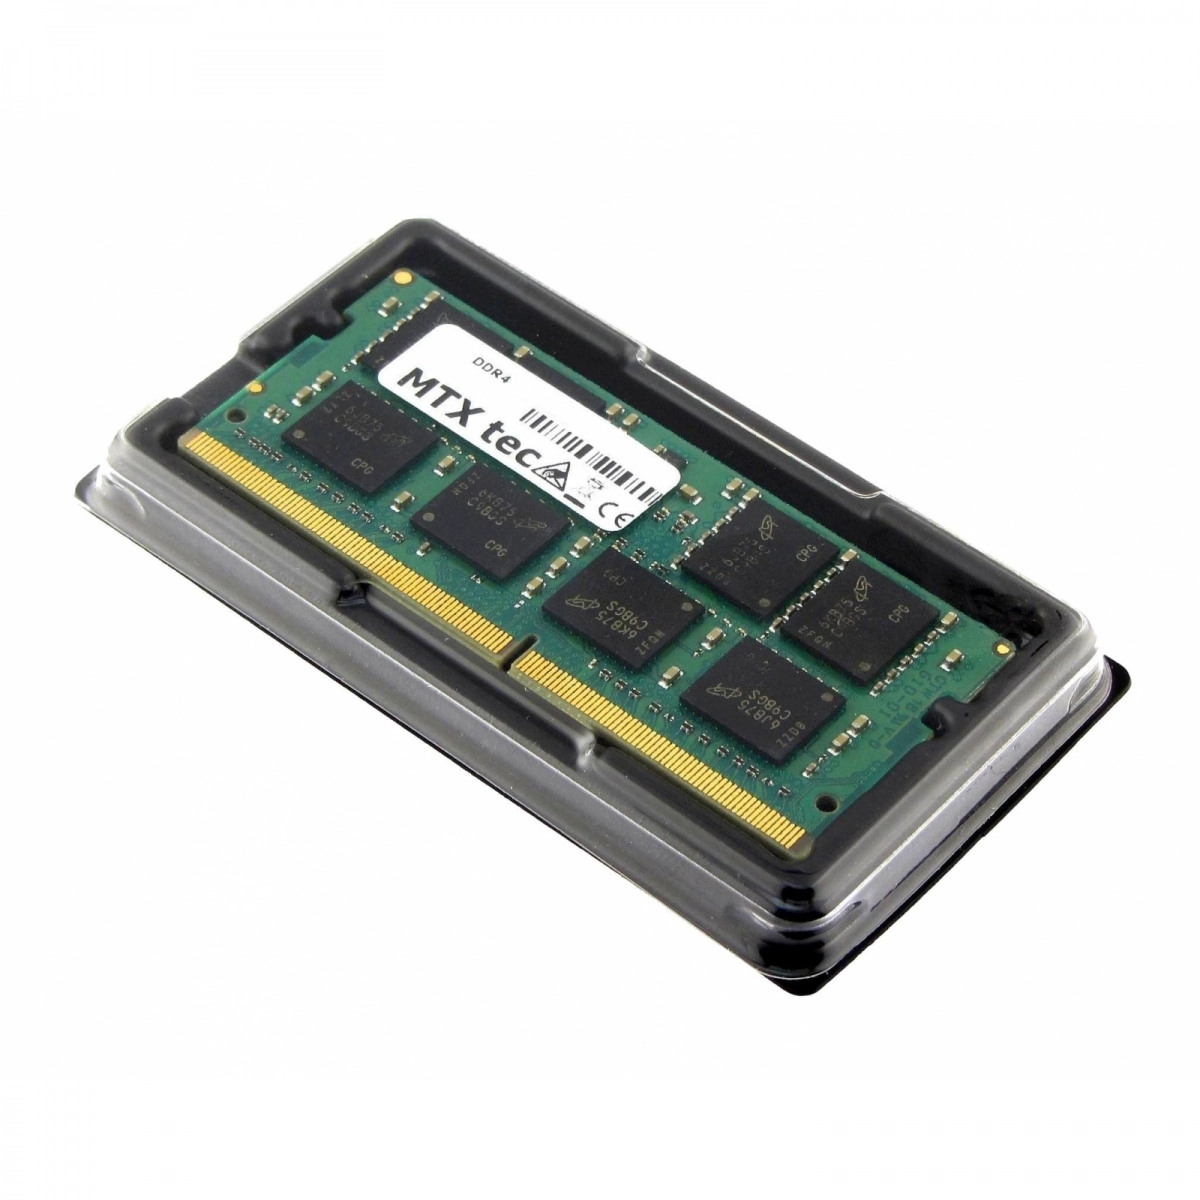 MTXtec 16GB Notebook RAM-Speicher SODIMM DDR4 PC4-19200, 2400MHz 260 pin